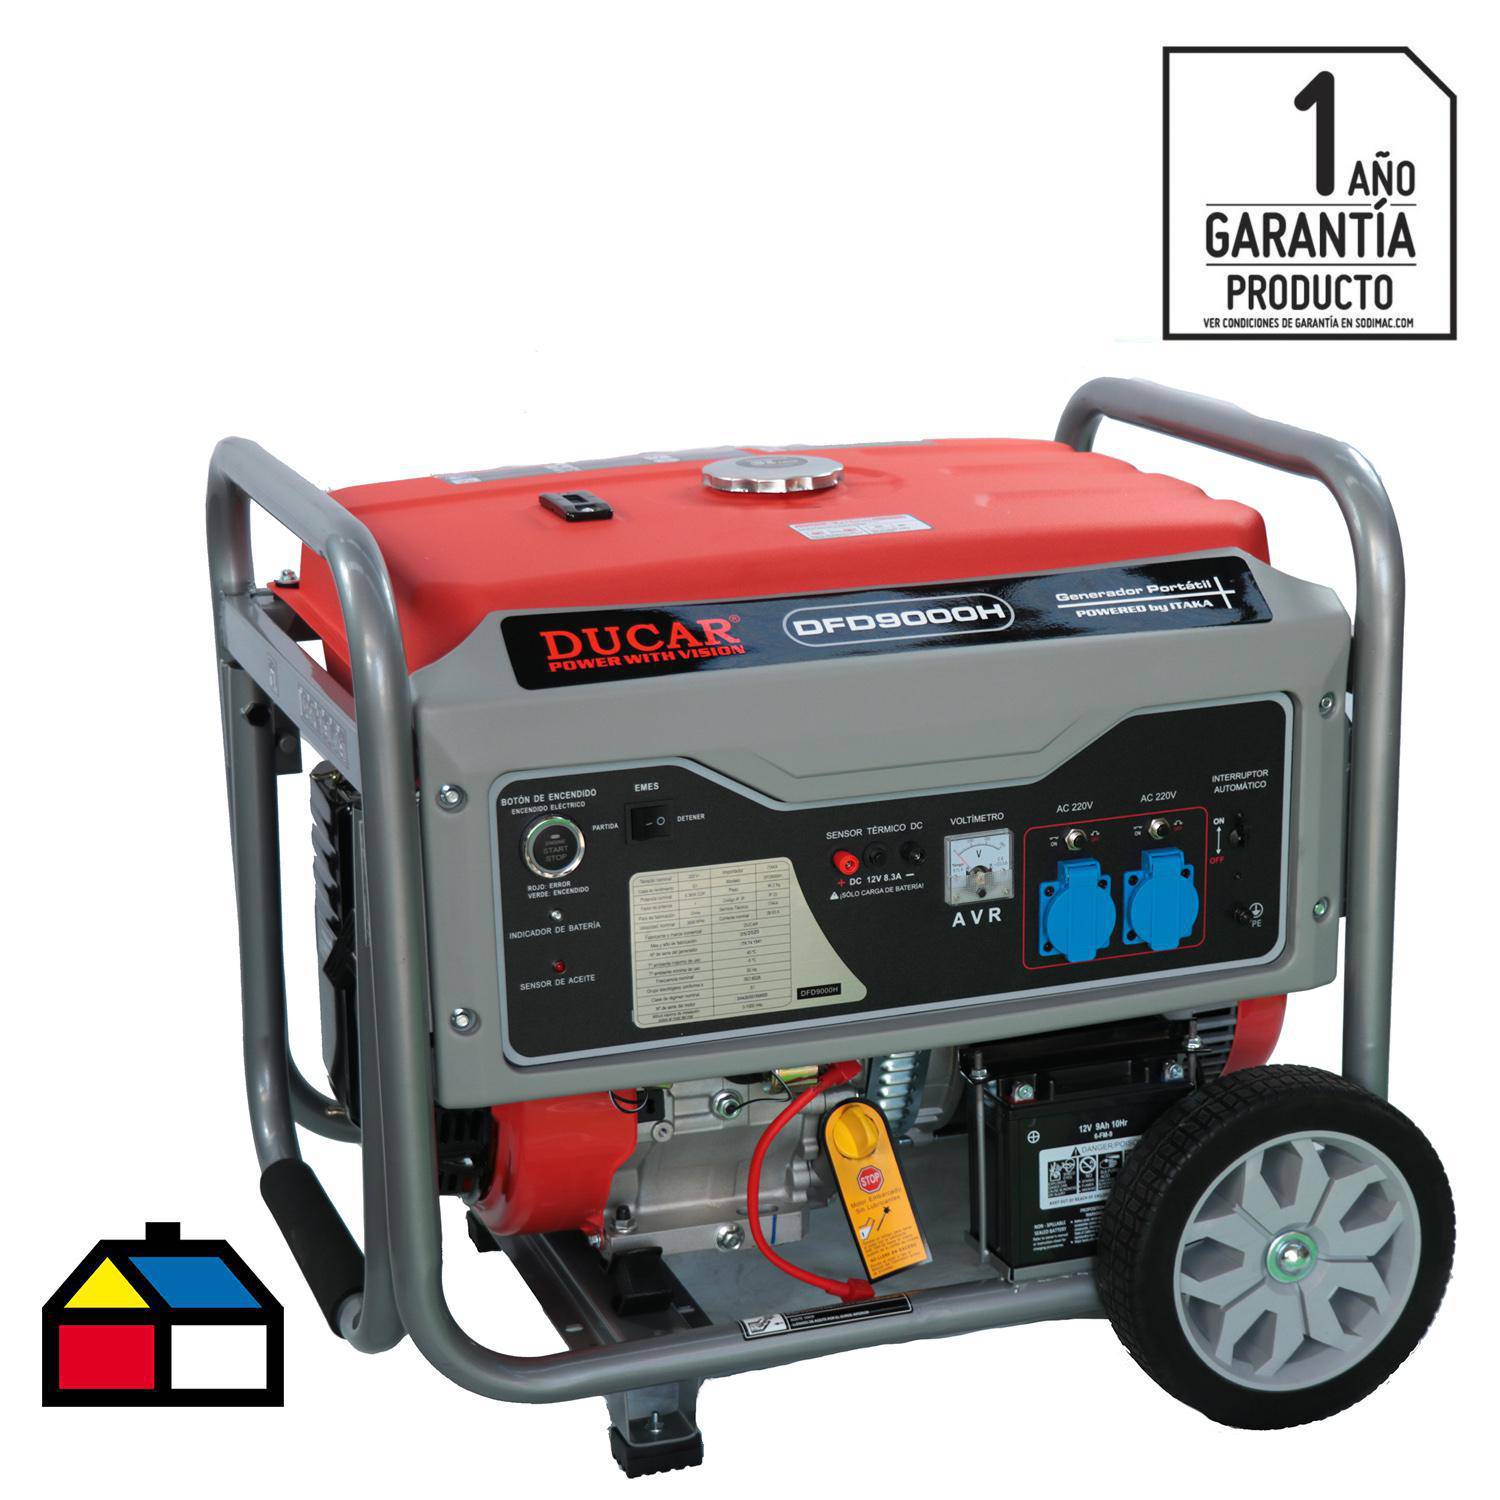 Generador Gasolina Dakota Equipment 7000 watts NUEVO - Miscellaneous Tools  - Antofagasta, Chile, Facebook Marketplace